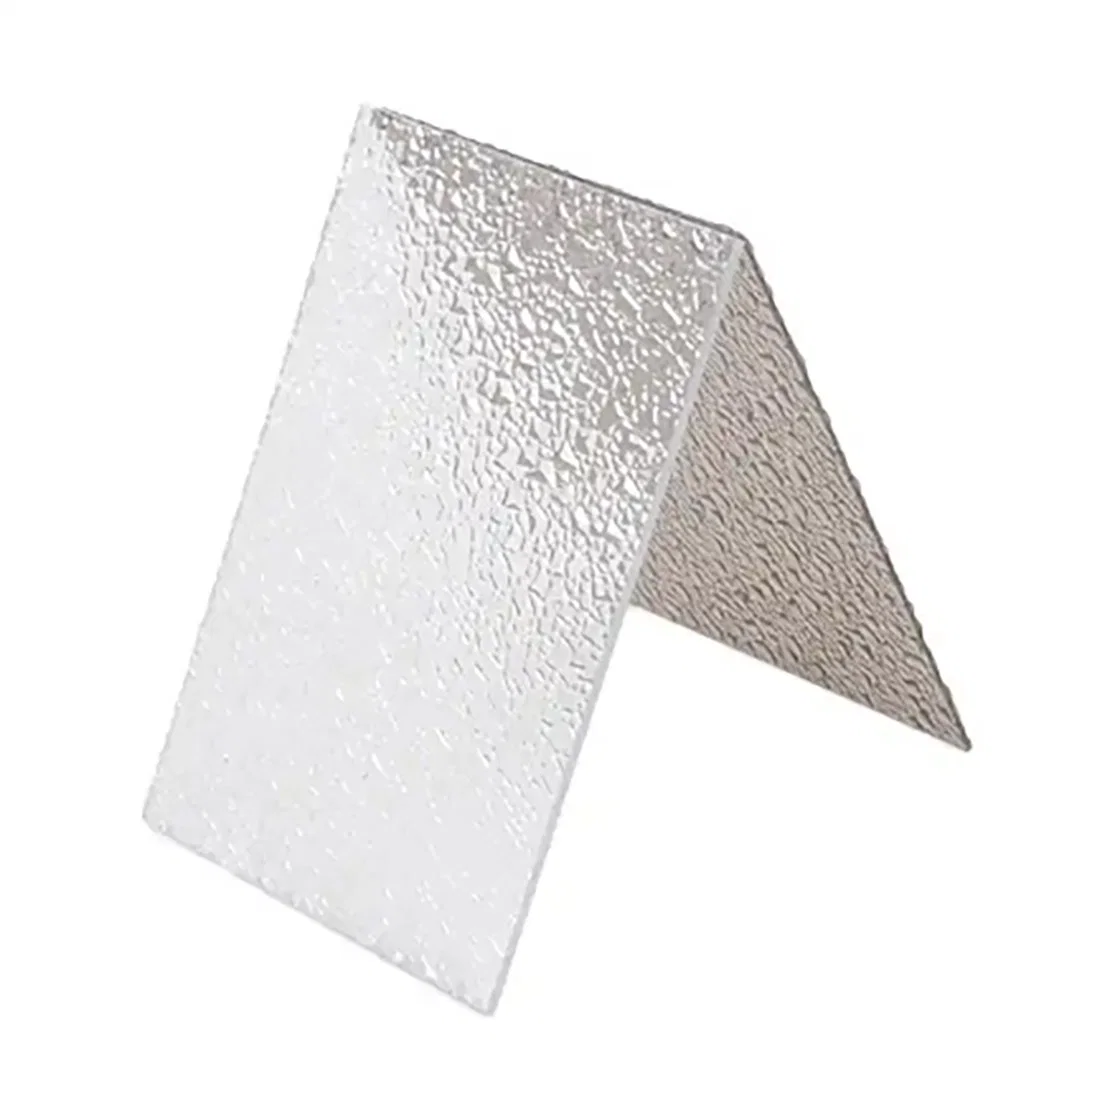 Diamond Embossed Polycarbonate Plastic Sheet, Multi-Color Selection Frosted Cloud Transparent Plastic